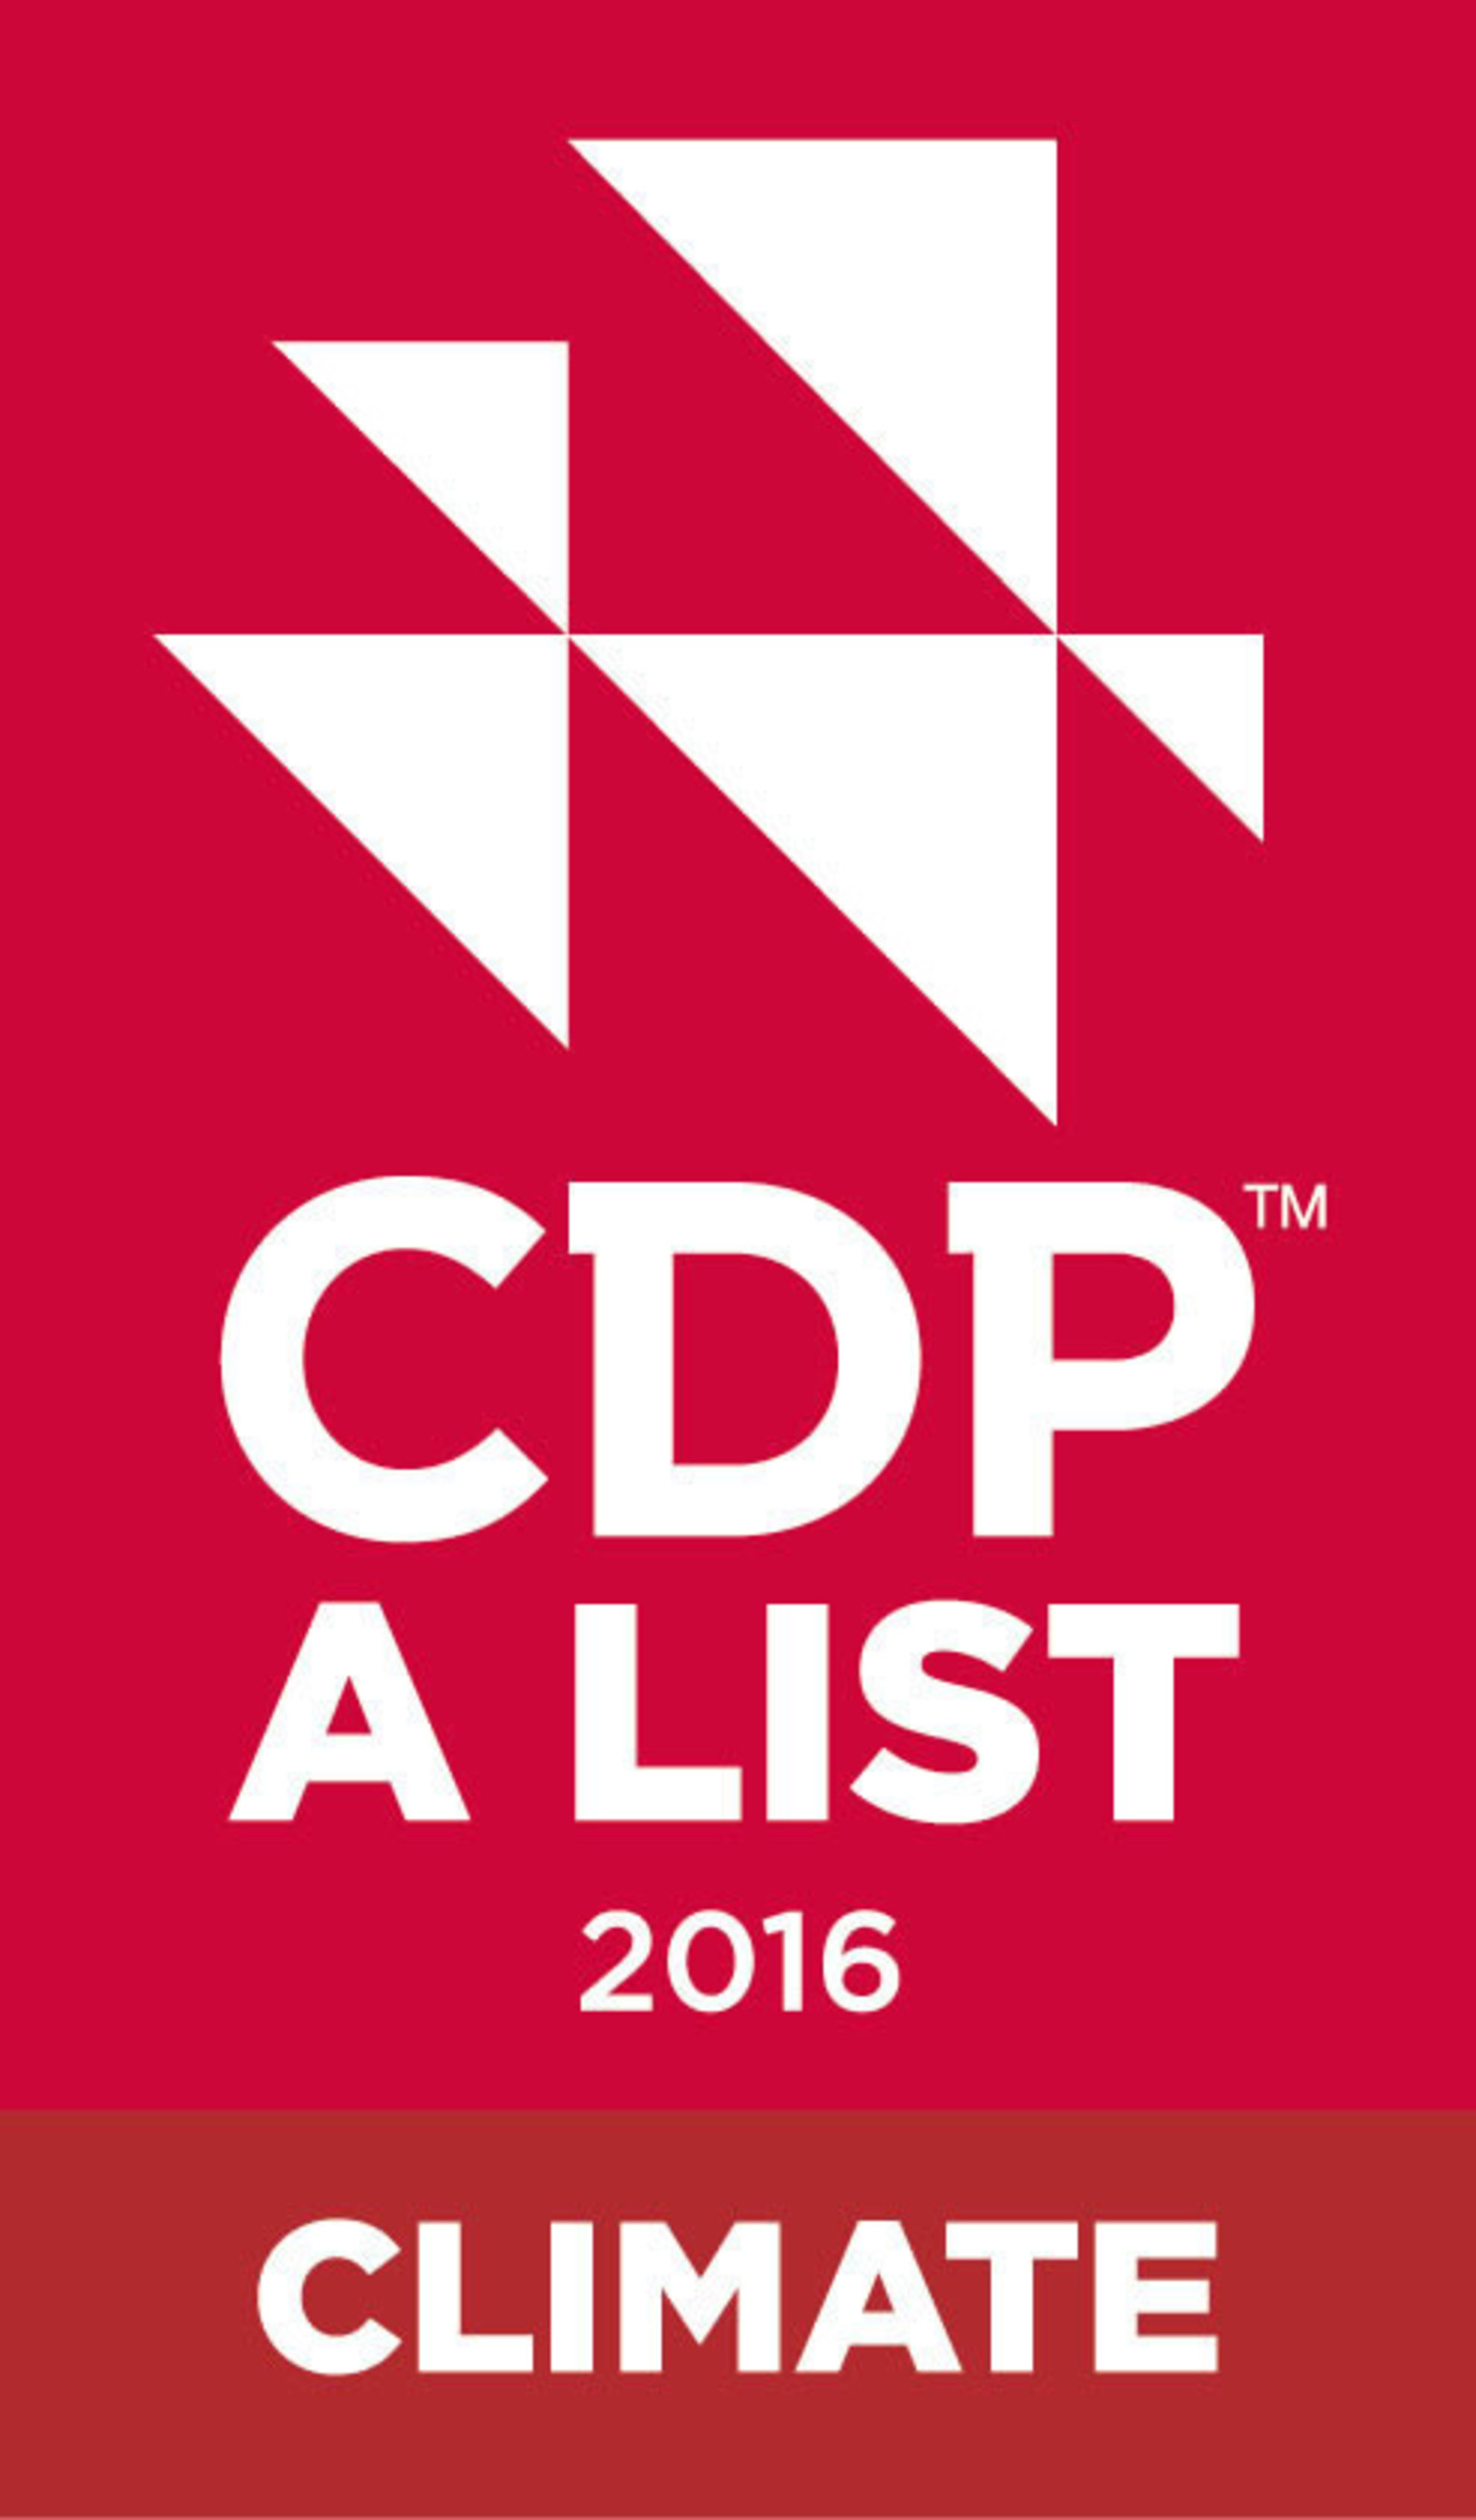 CDP A LIST 2016 CLIMATE (PRNewsFoto/Arcelik A.S.)